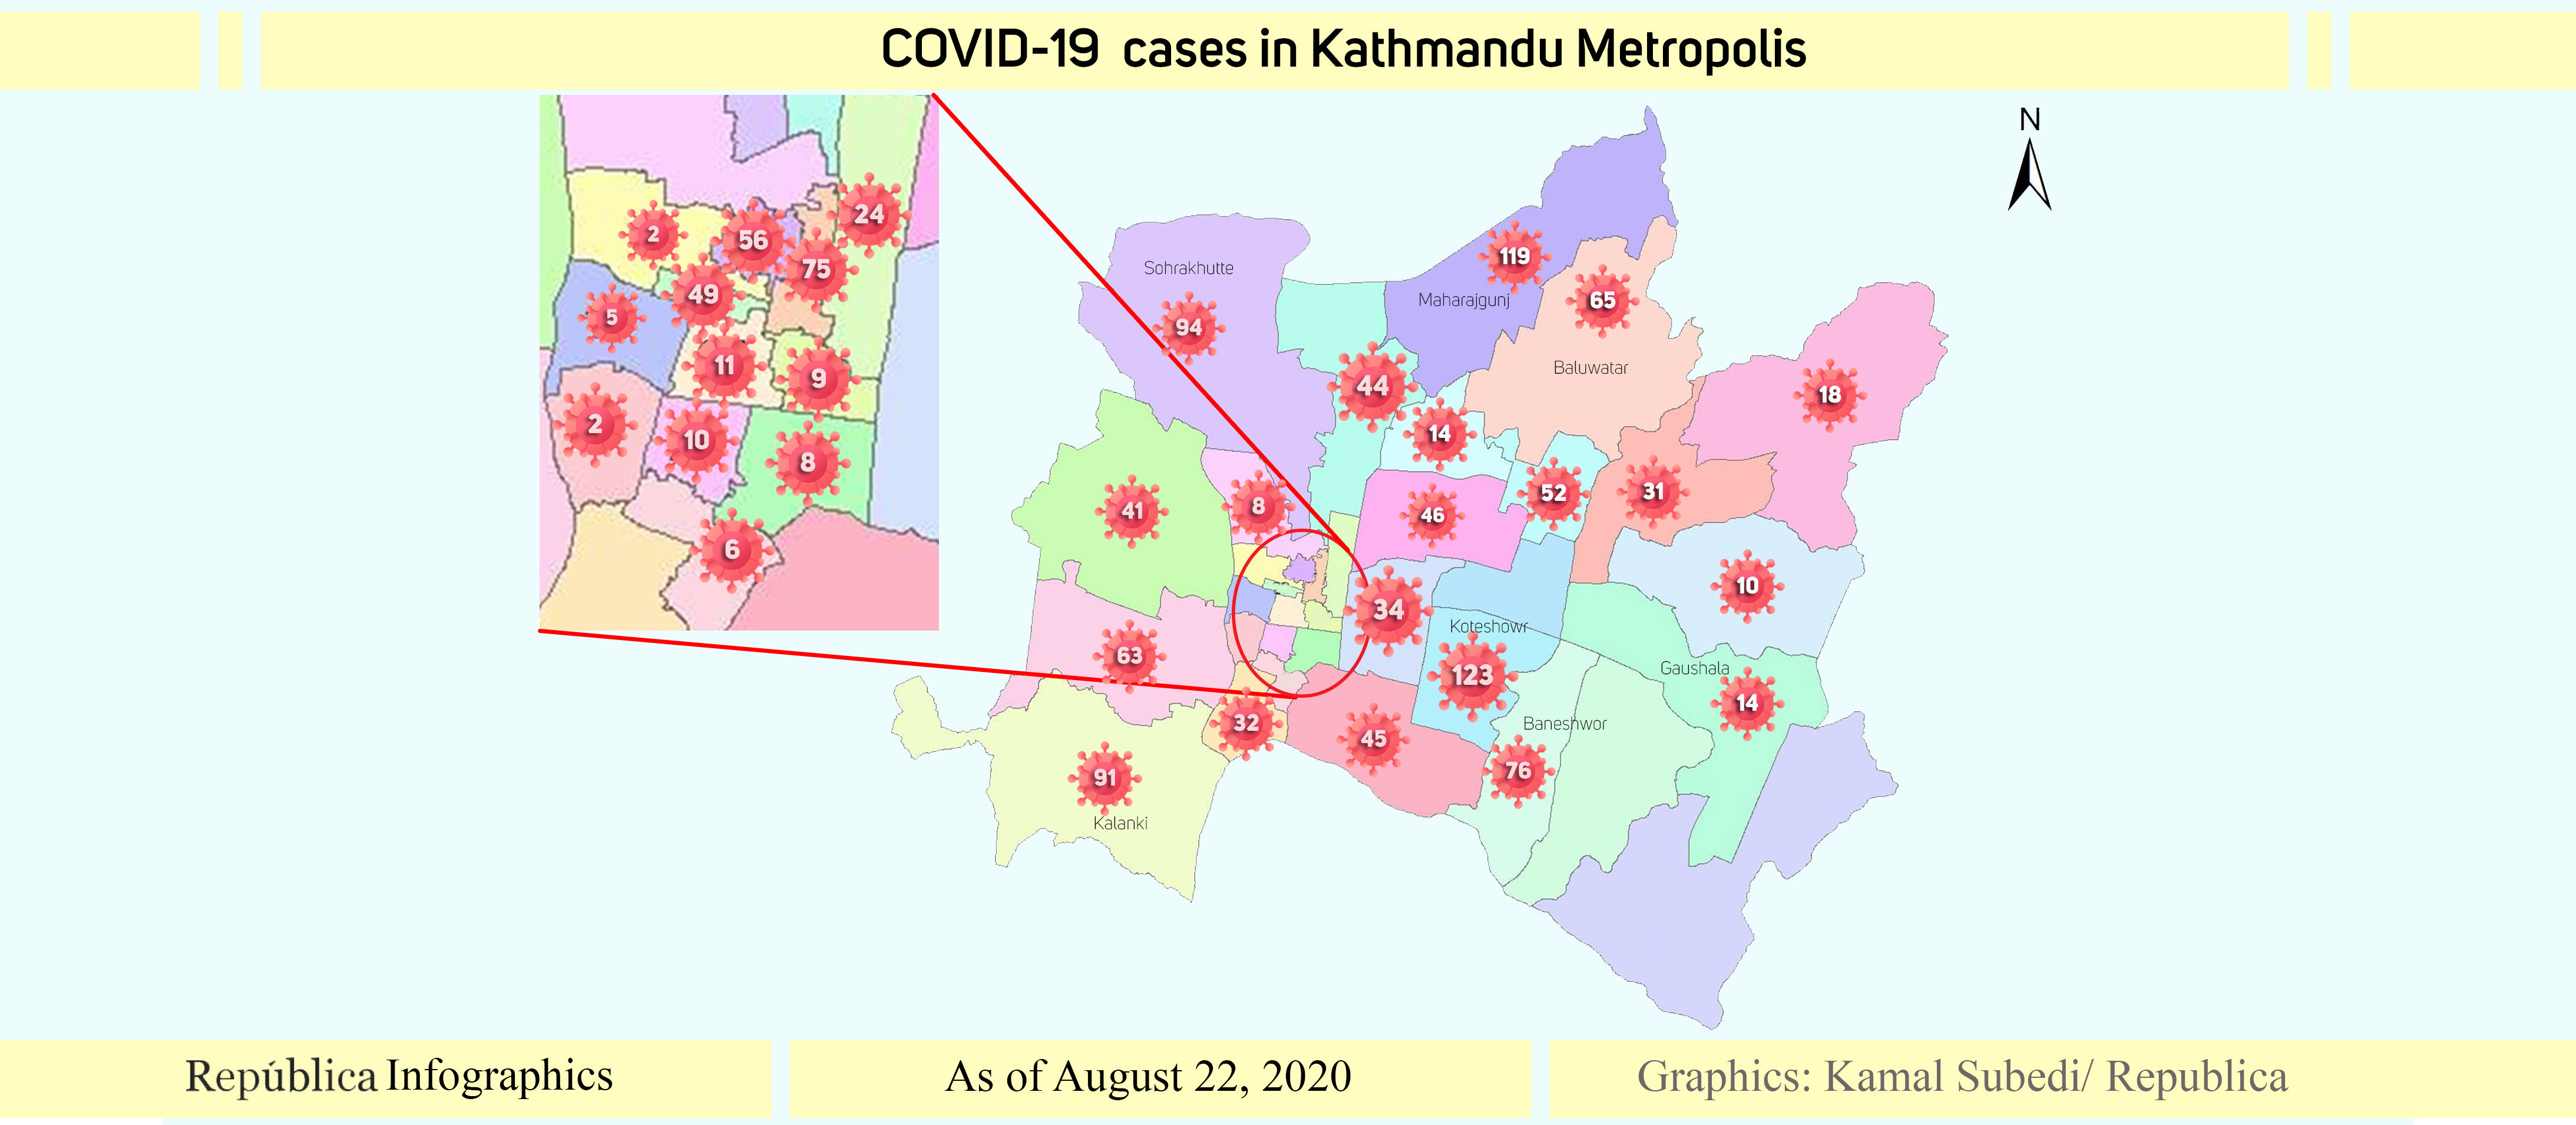 Koteshwor and Maharajgunj are COVID-19 ‘hotspots’ in Kathmandu